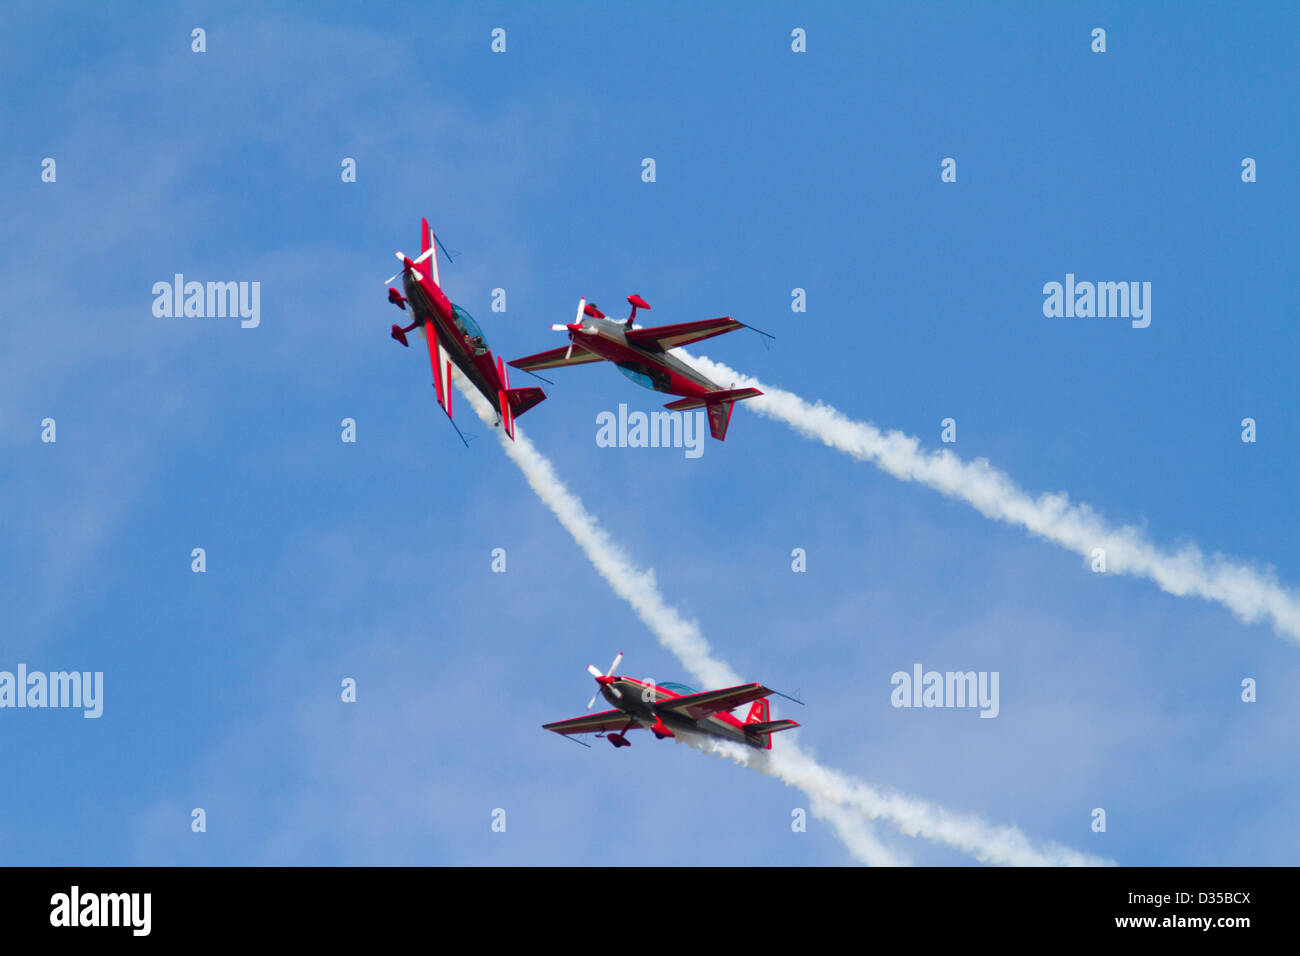 Royal Jordanian Air Force Falcons Aerobatic display team Stock Photo